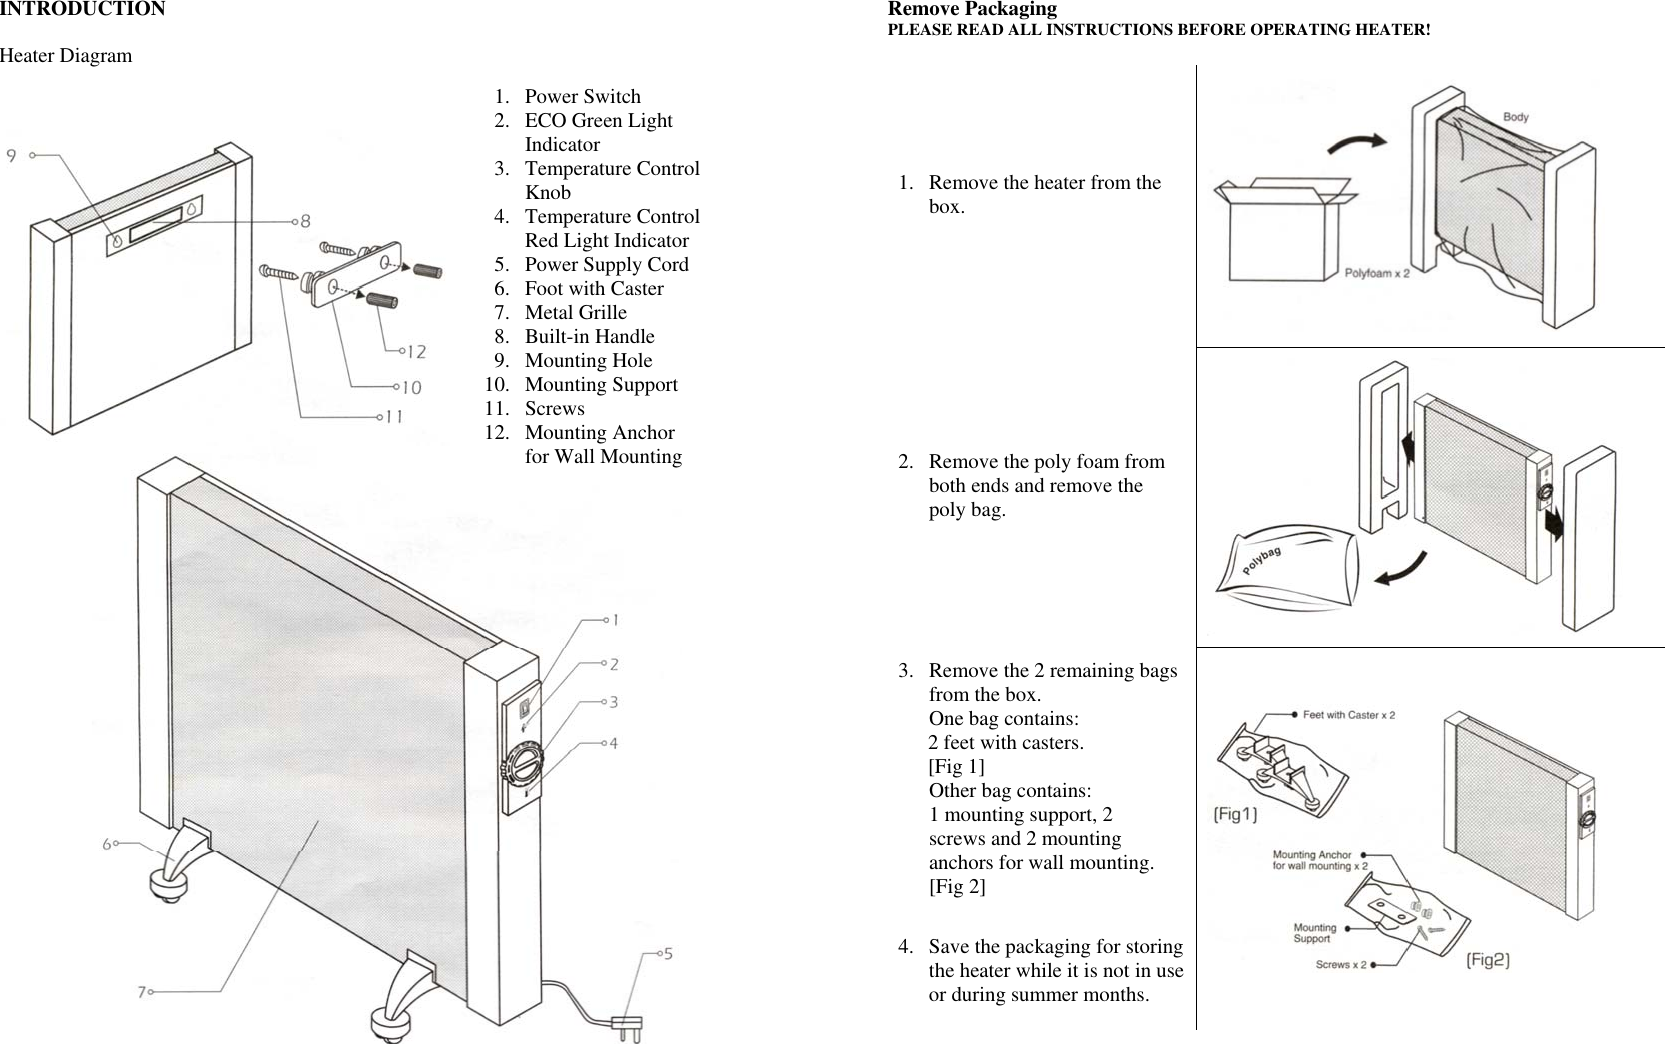 Page 2 of 5 - Soleus-Air Soleus-Air-Soleus-Air-Electric-Heater-Hgw-308-Users-Manual- MICATHERMIC PANEL HEATER  Soleus-air-soleus-air-electric-heater-hgw-308-users-manual